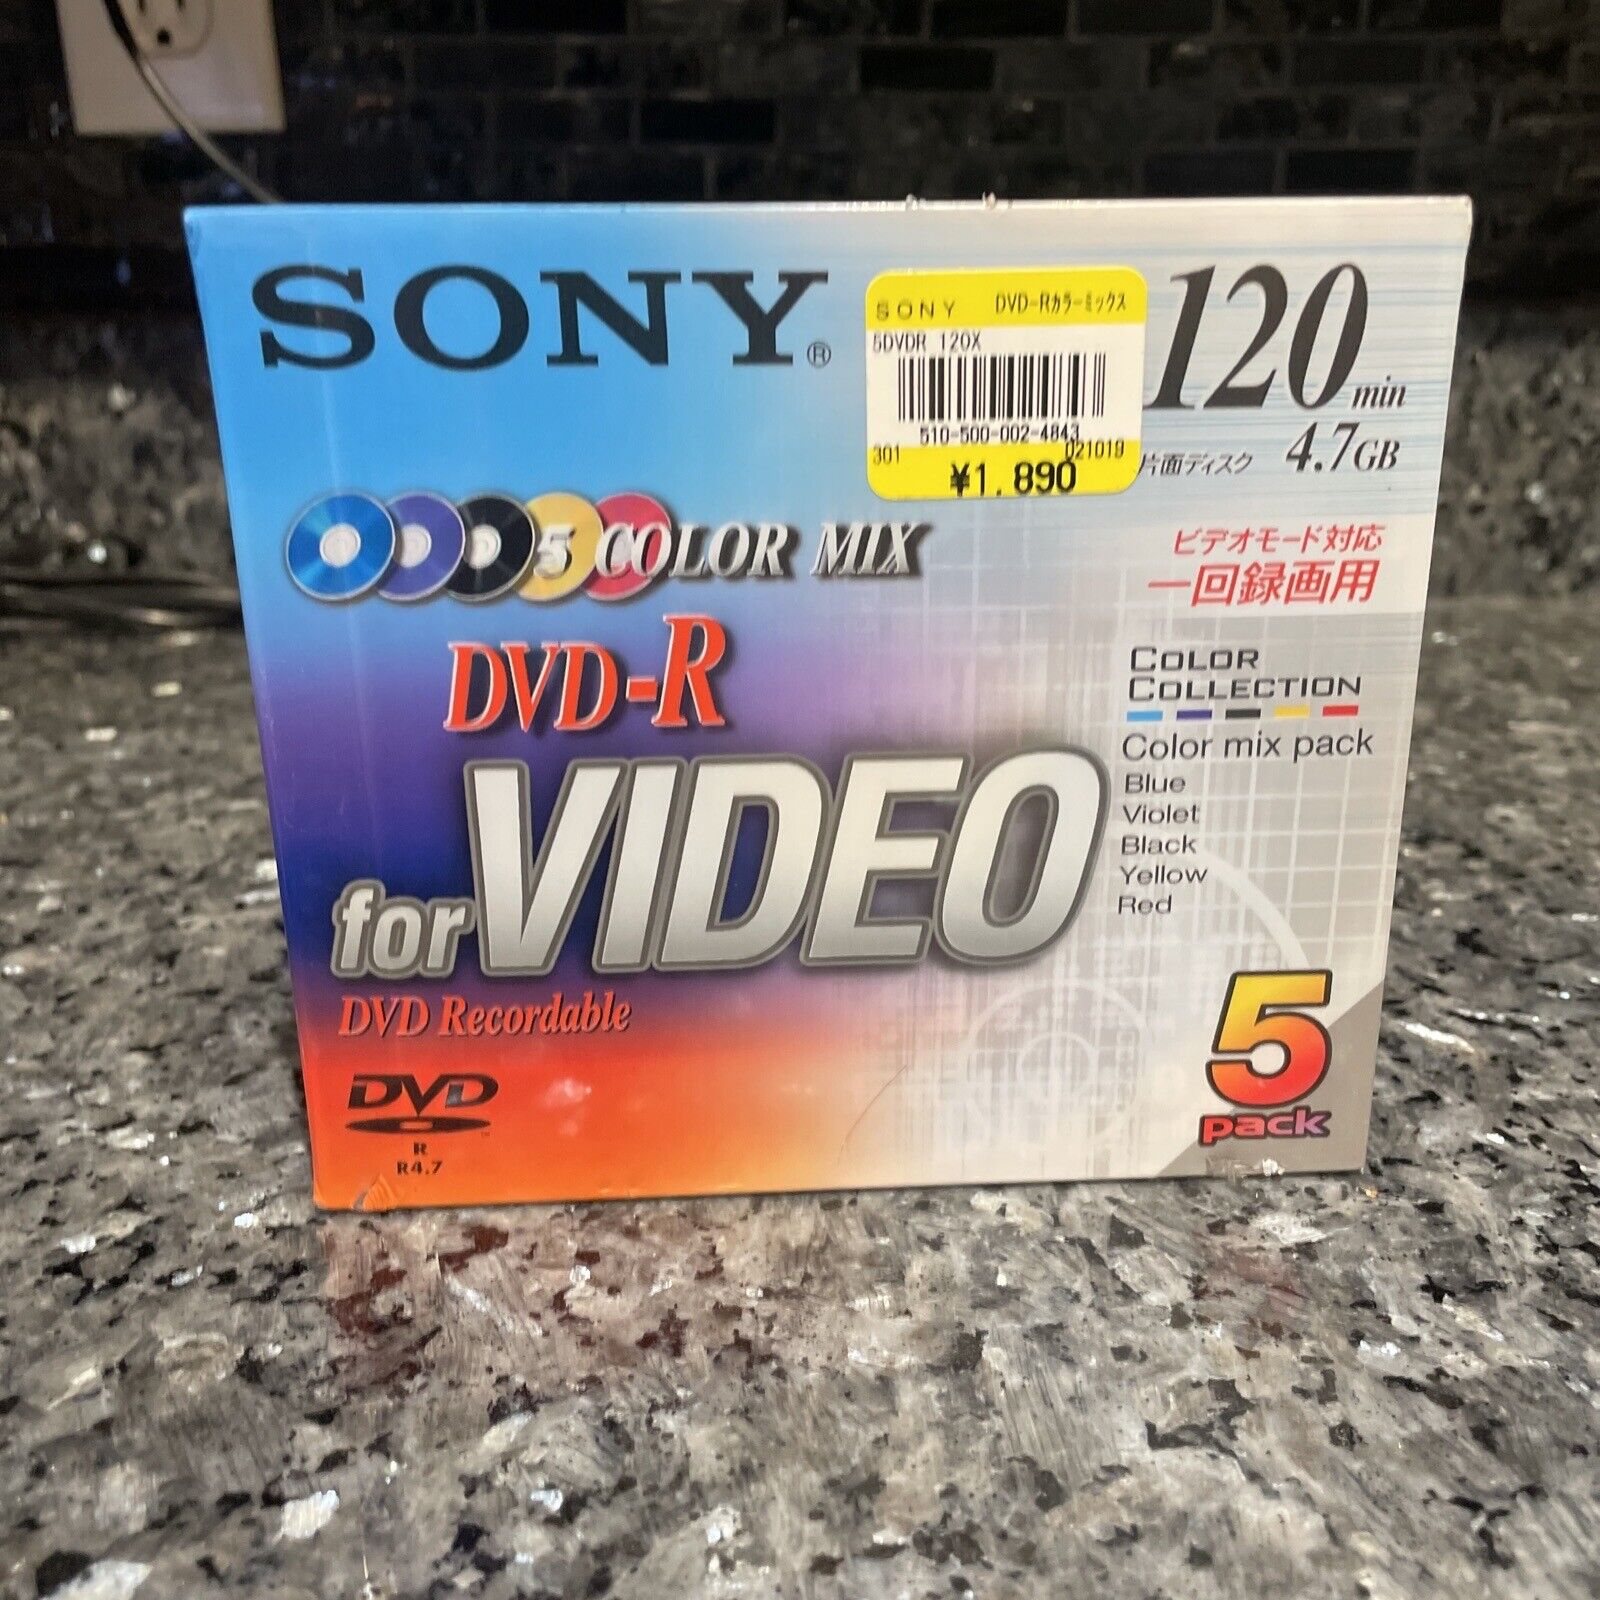 5 PACK SONY DVD+R RECORDING MEDIA BRAND NEW 120 MINUTE 4.7 GB Japanese Box